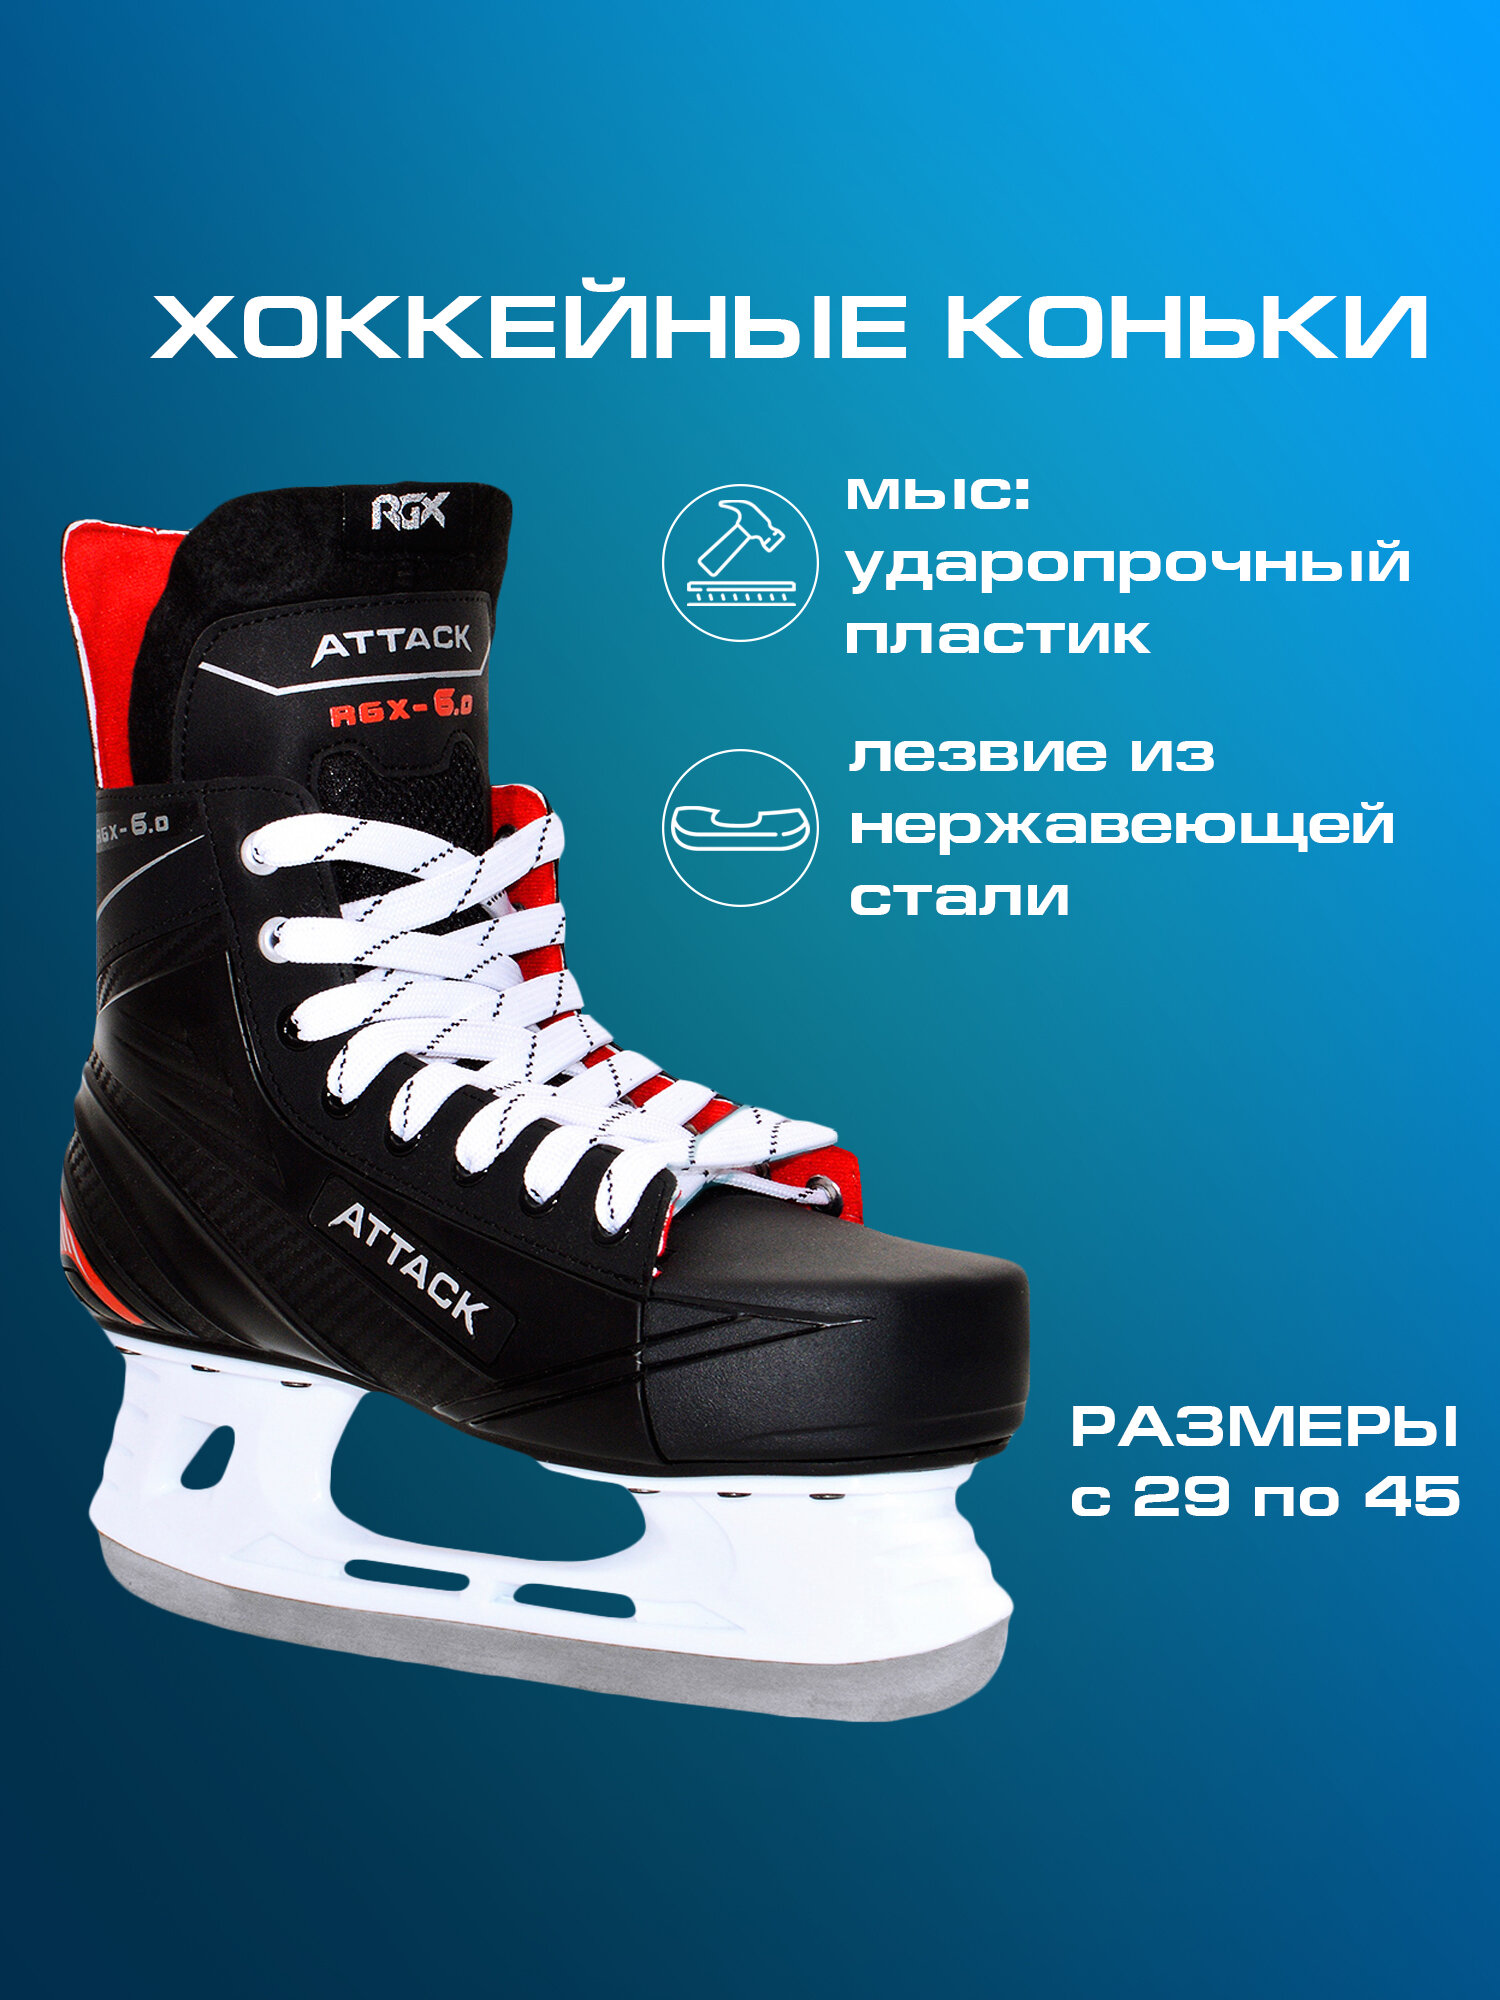 Хоккейные коньки RGX-6.0 ATTACK Red (Размер : 42)